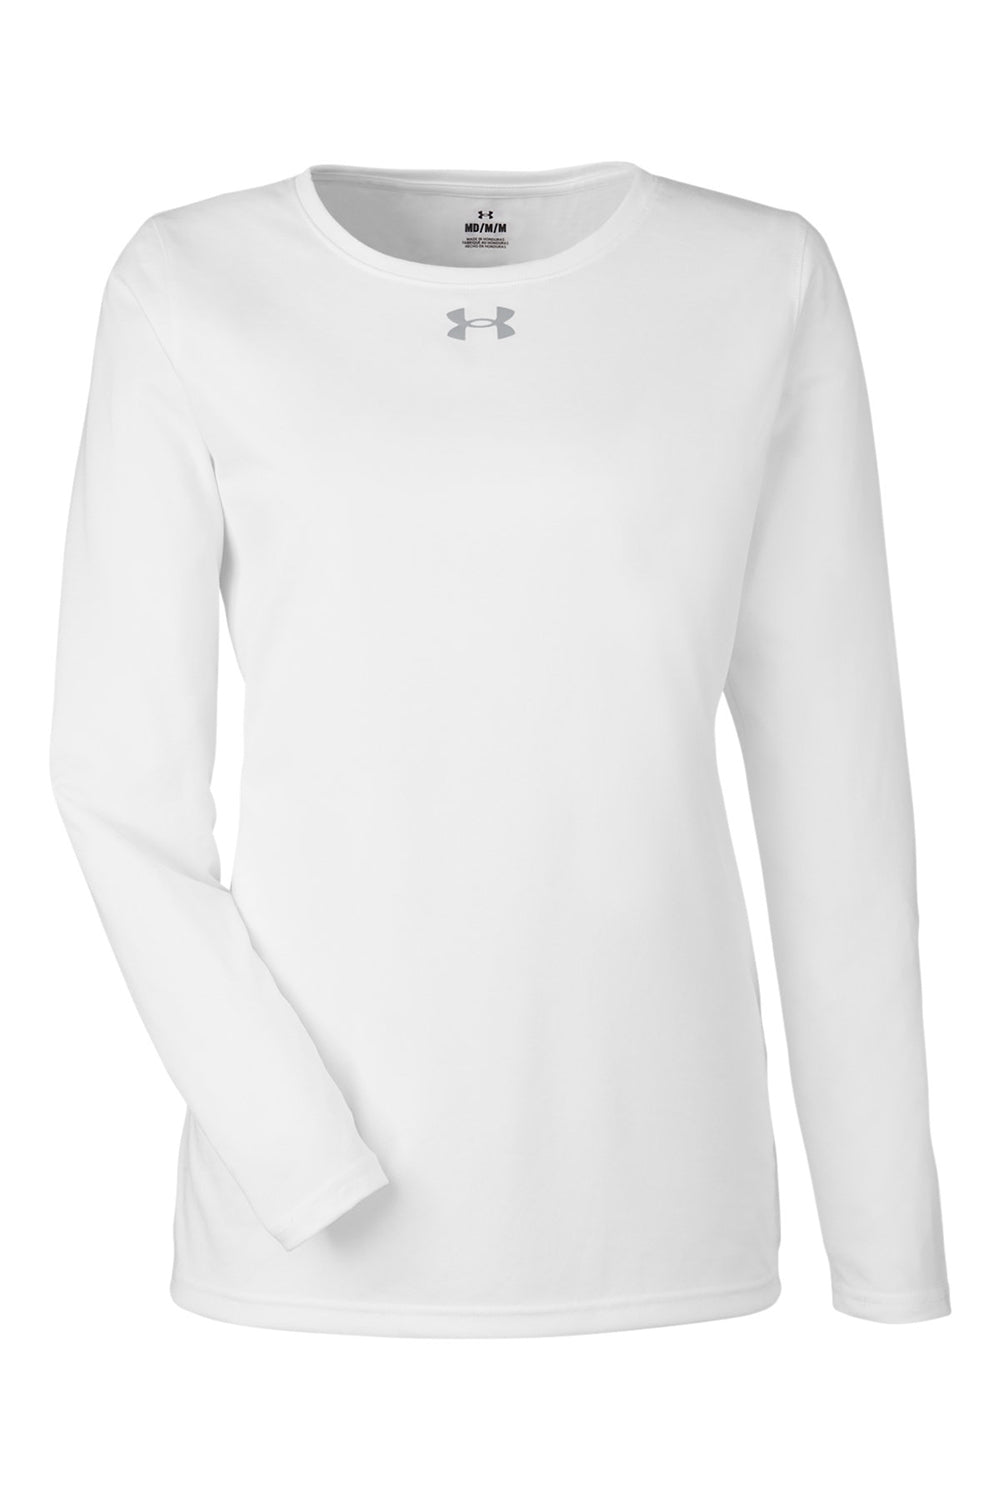 Under Armour 1376852 Womens Team Tech Moisture Wicking Long Sleeve Crewneck T-Shirt White Flat Front